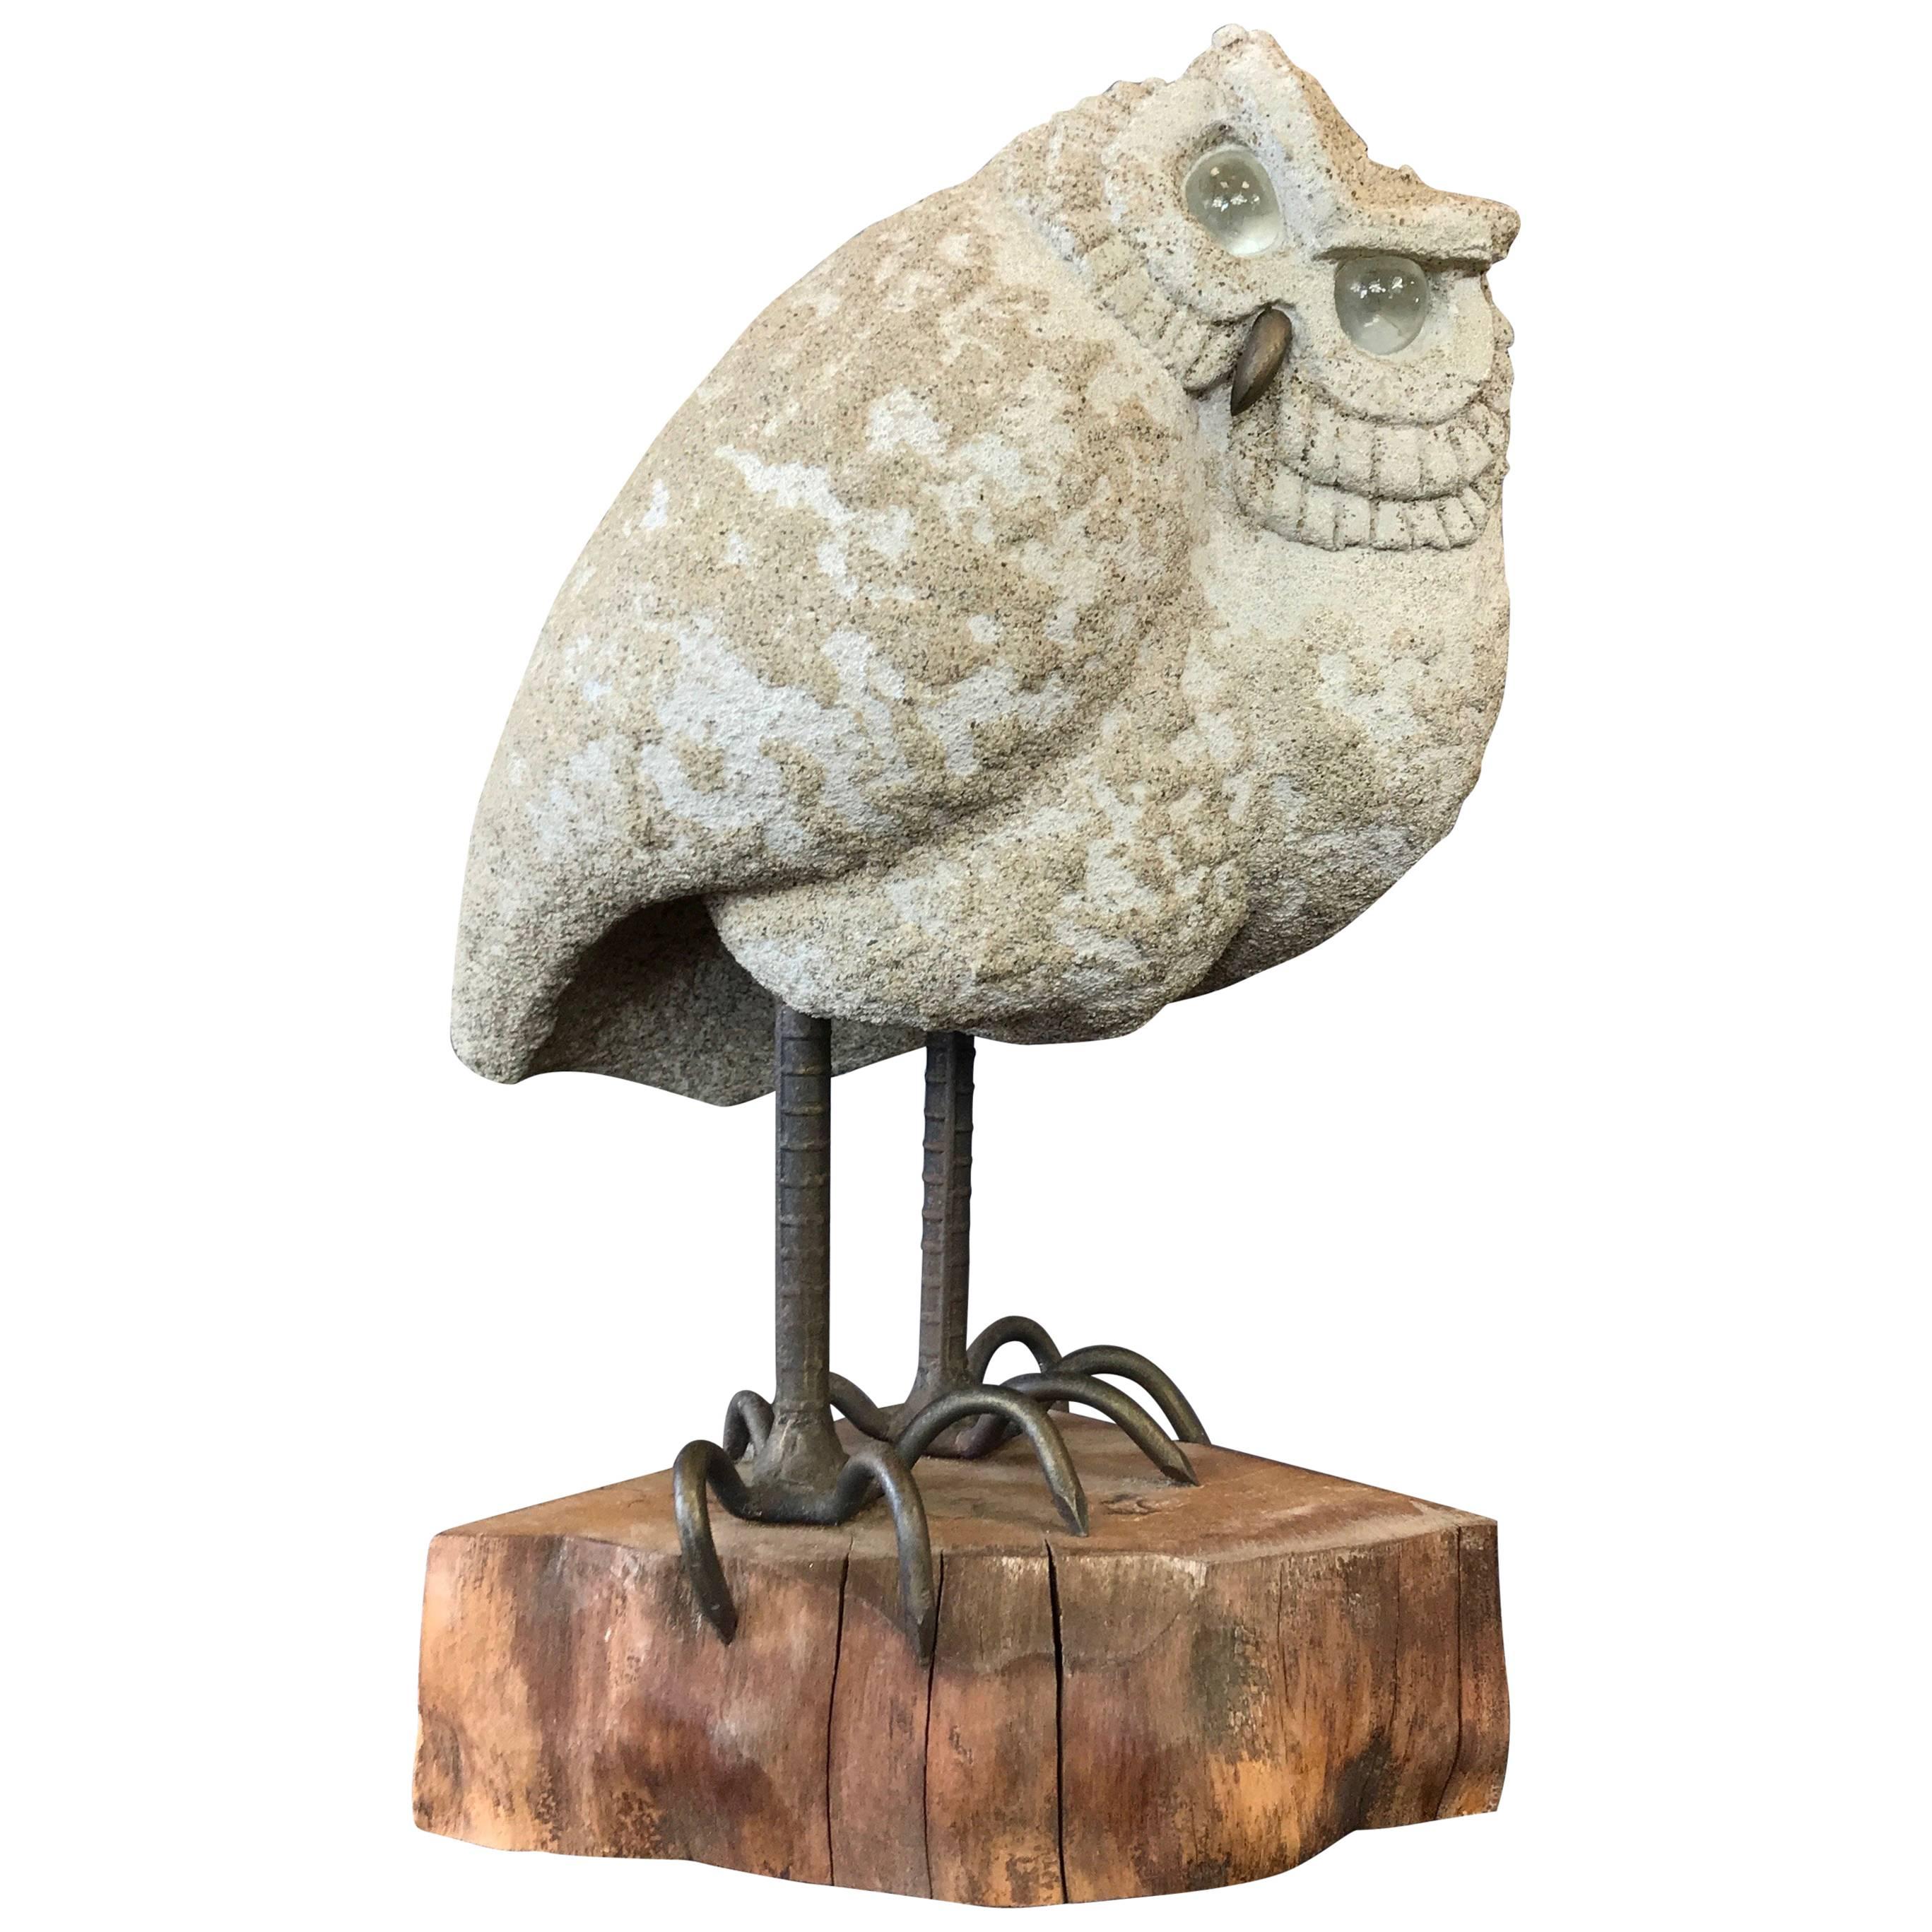 Owl Sculpture by Midcentury California Artist Lou Rankin